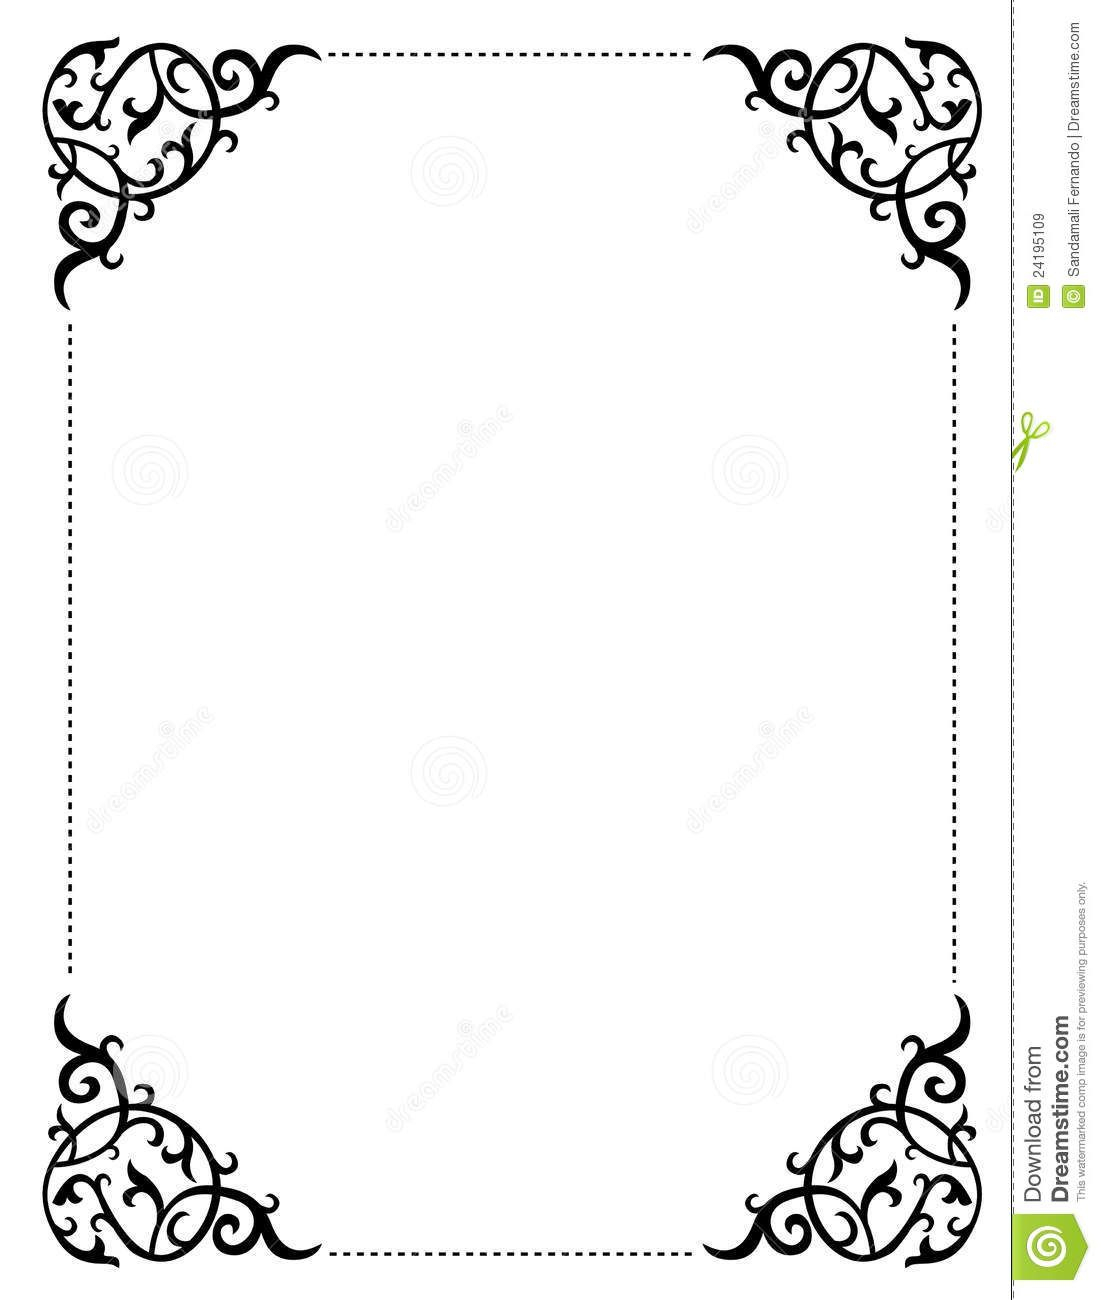 Free Printable Wedding Clip Art Borders And Backgrounds Invitation - Free Printable Wedding Clipart Borders